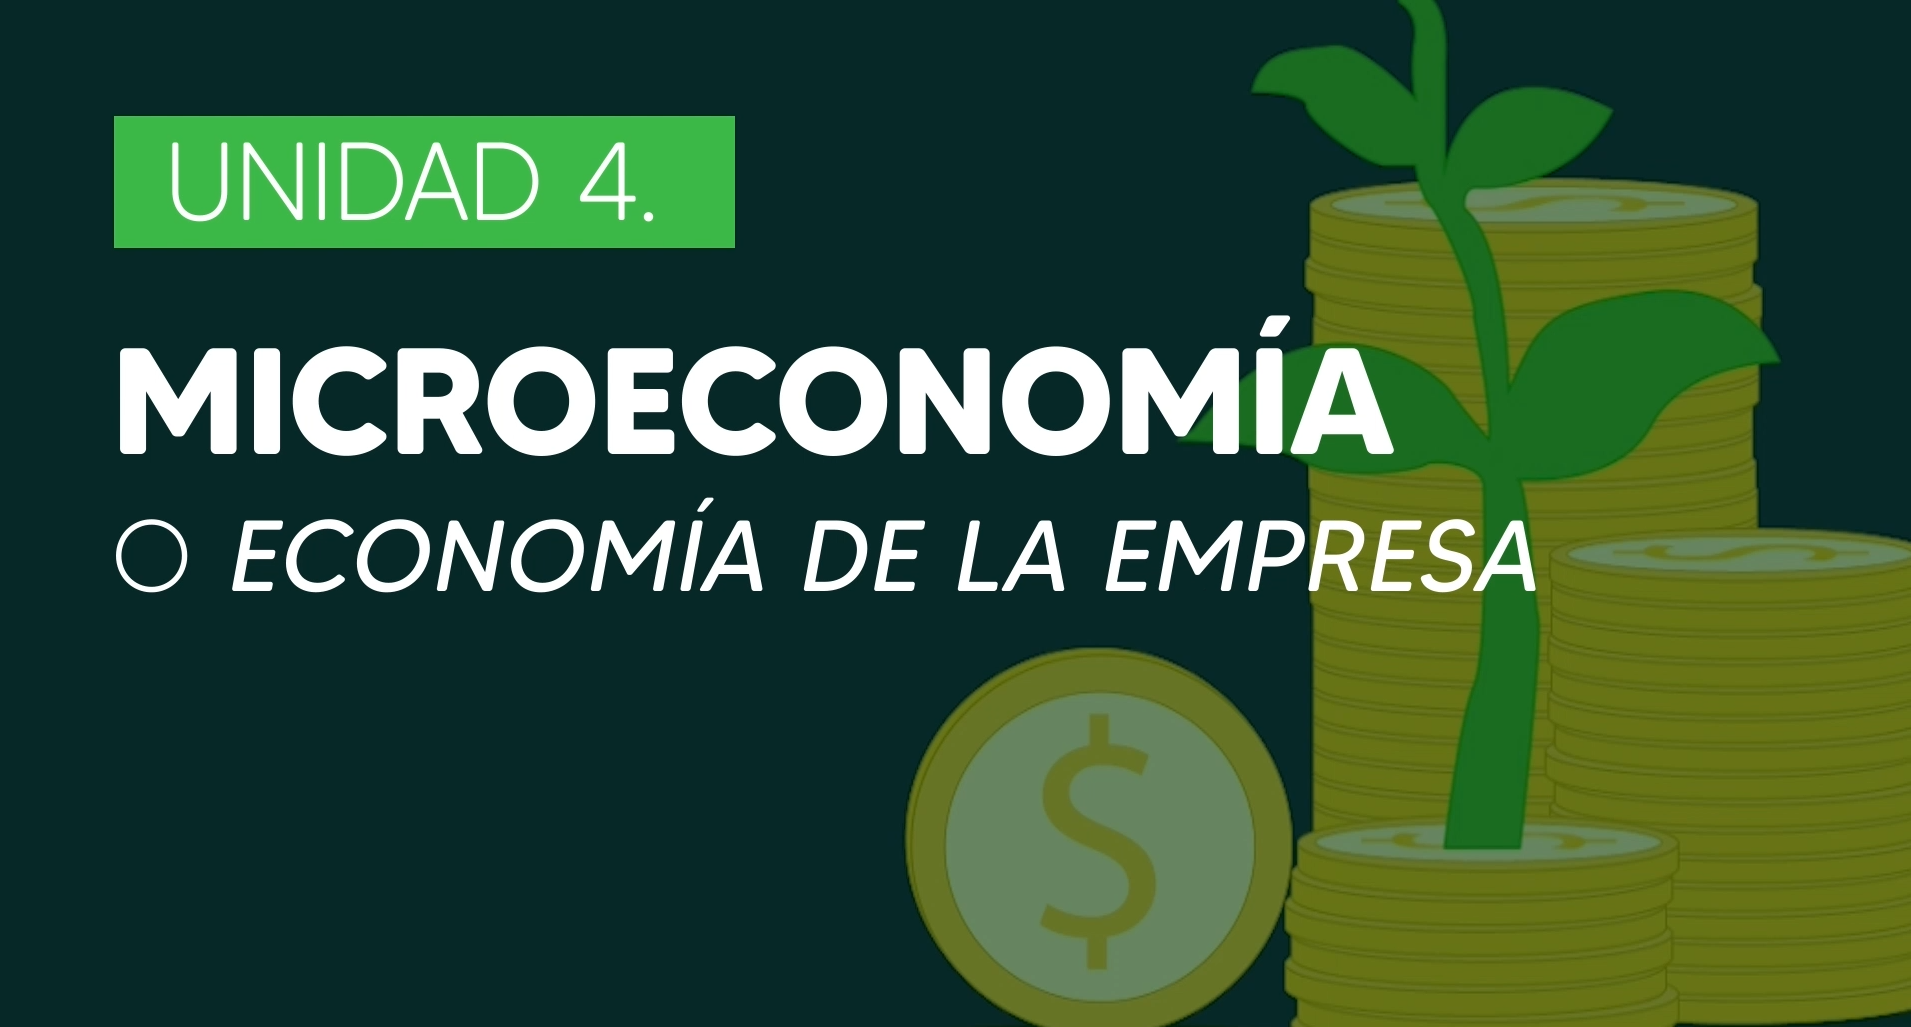 Portada_Microeconomia.png